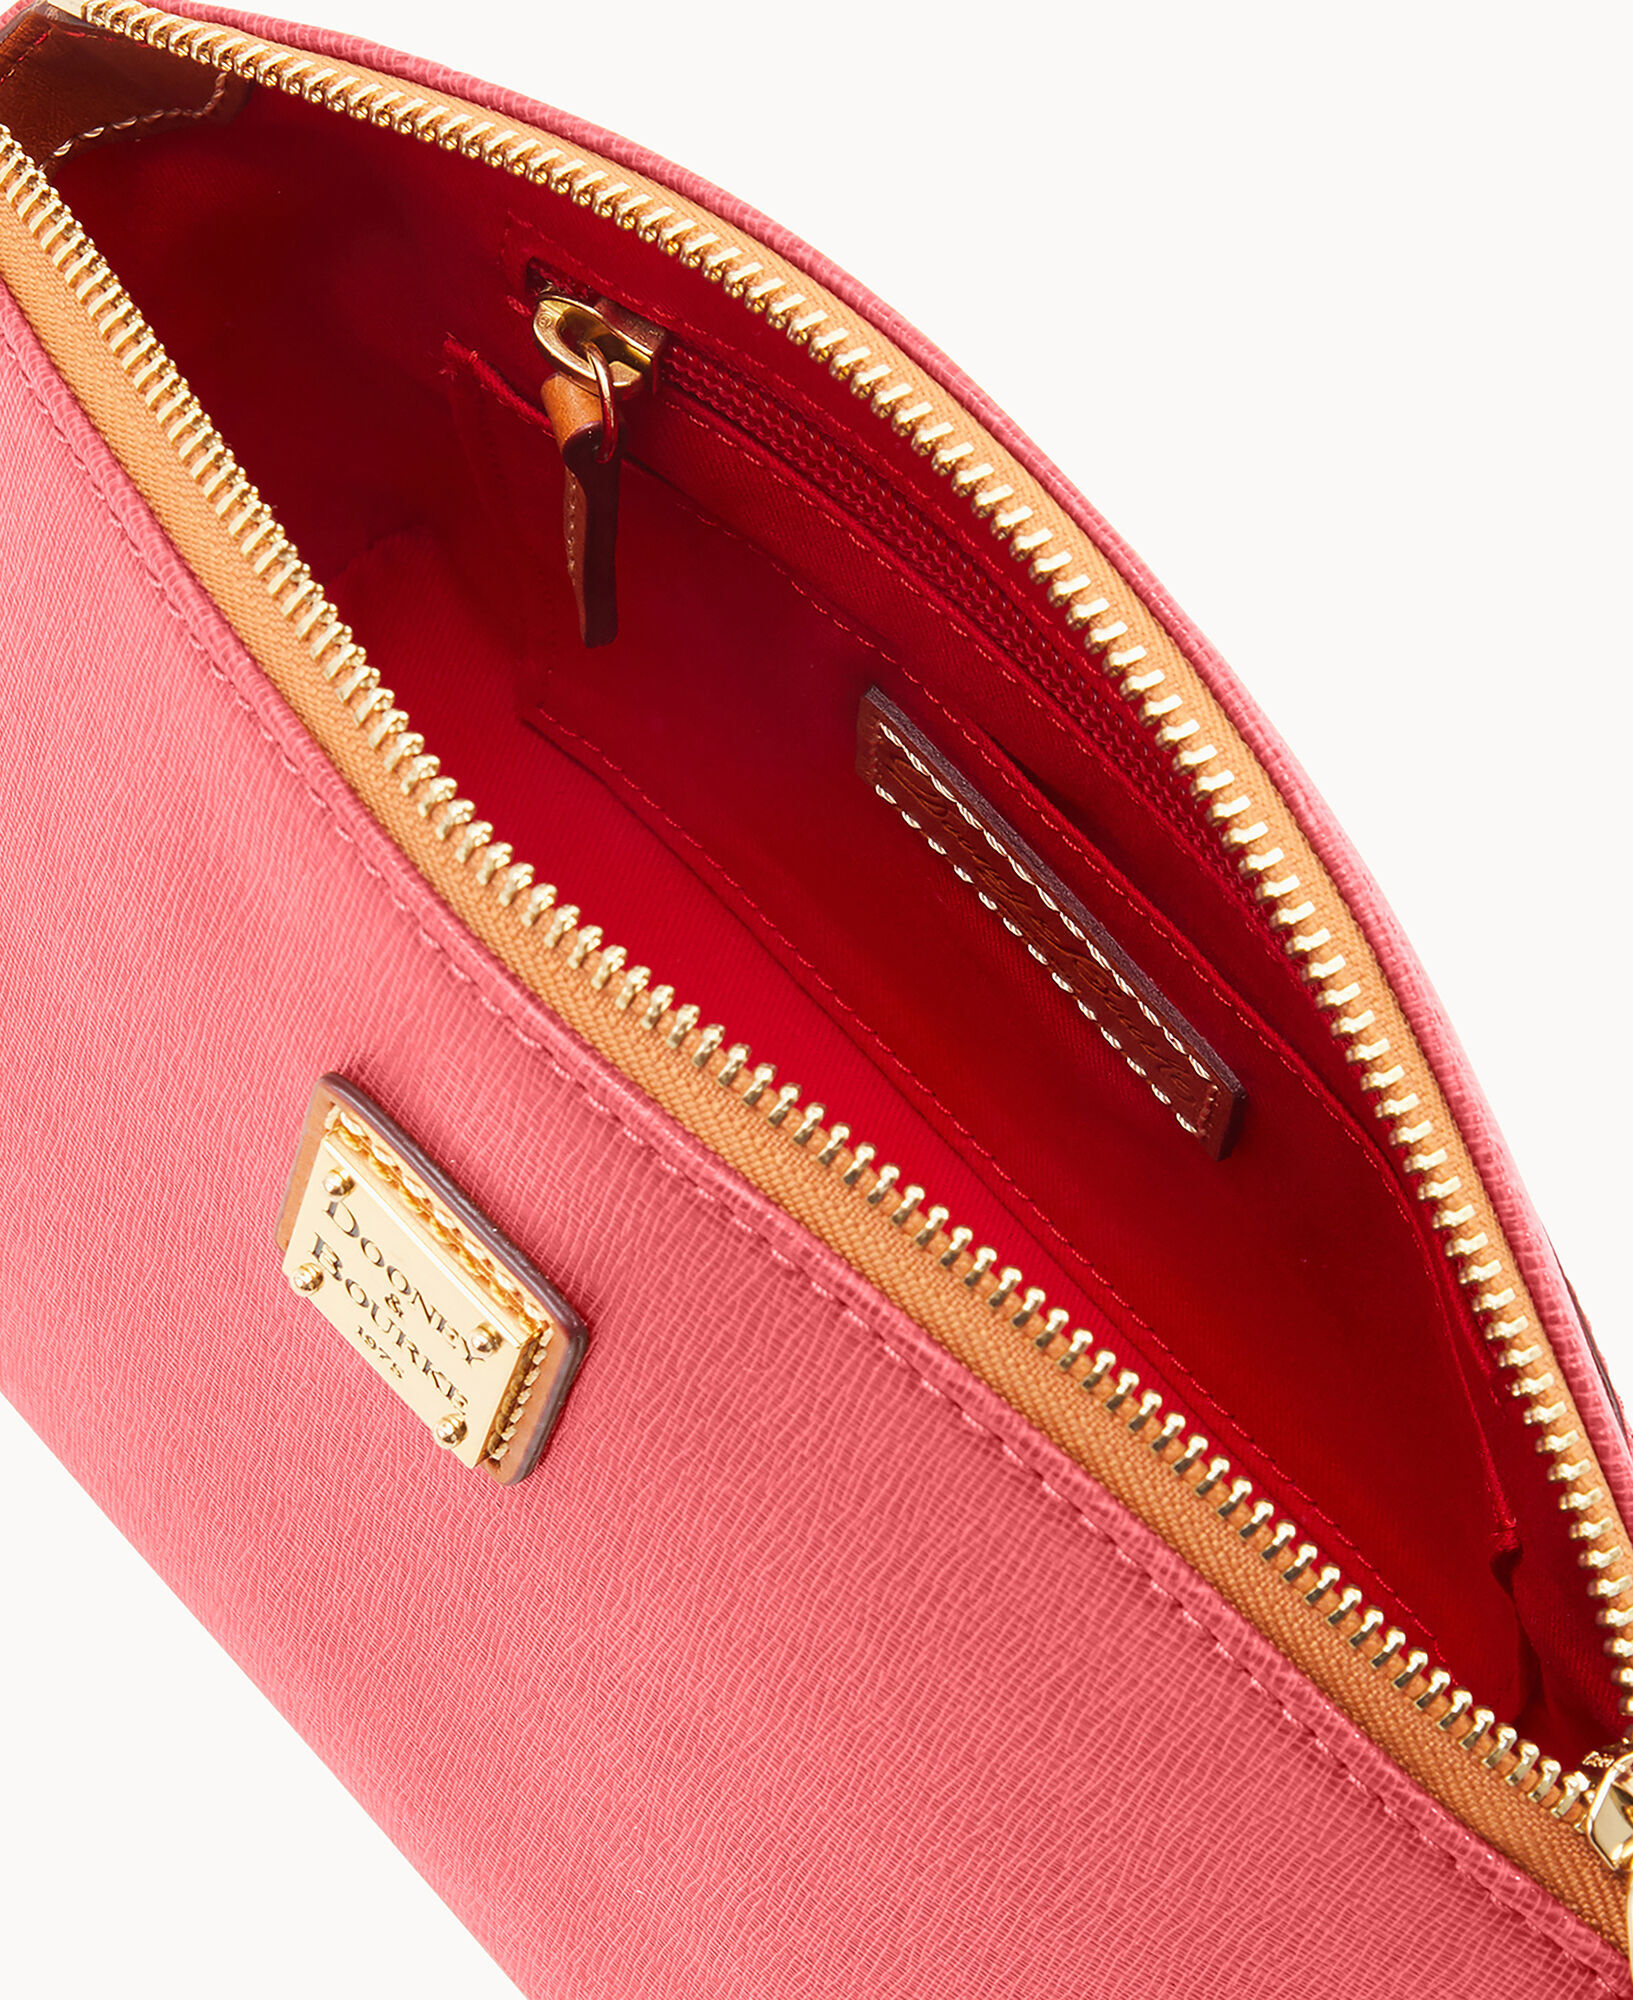 Dooney & Bourke Saffiano Small Leather Crossbody Bag